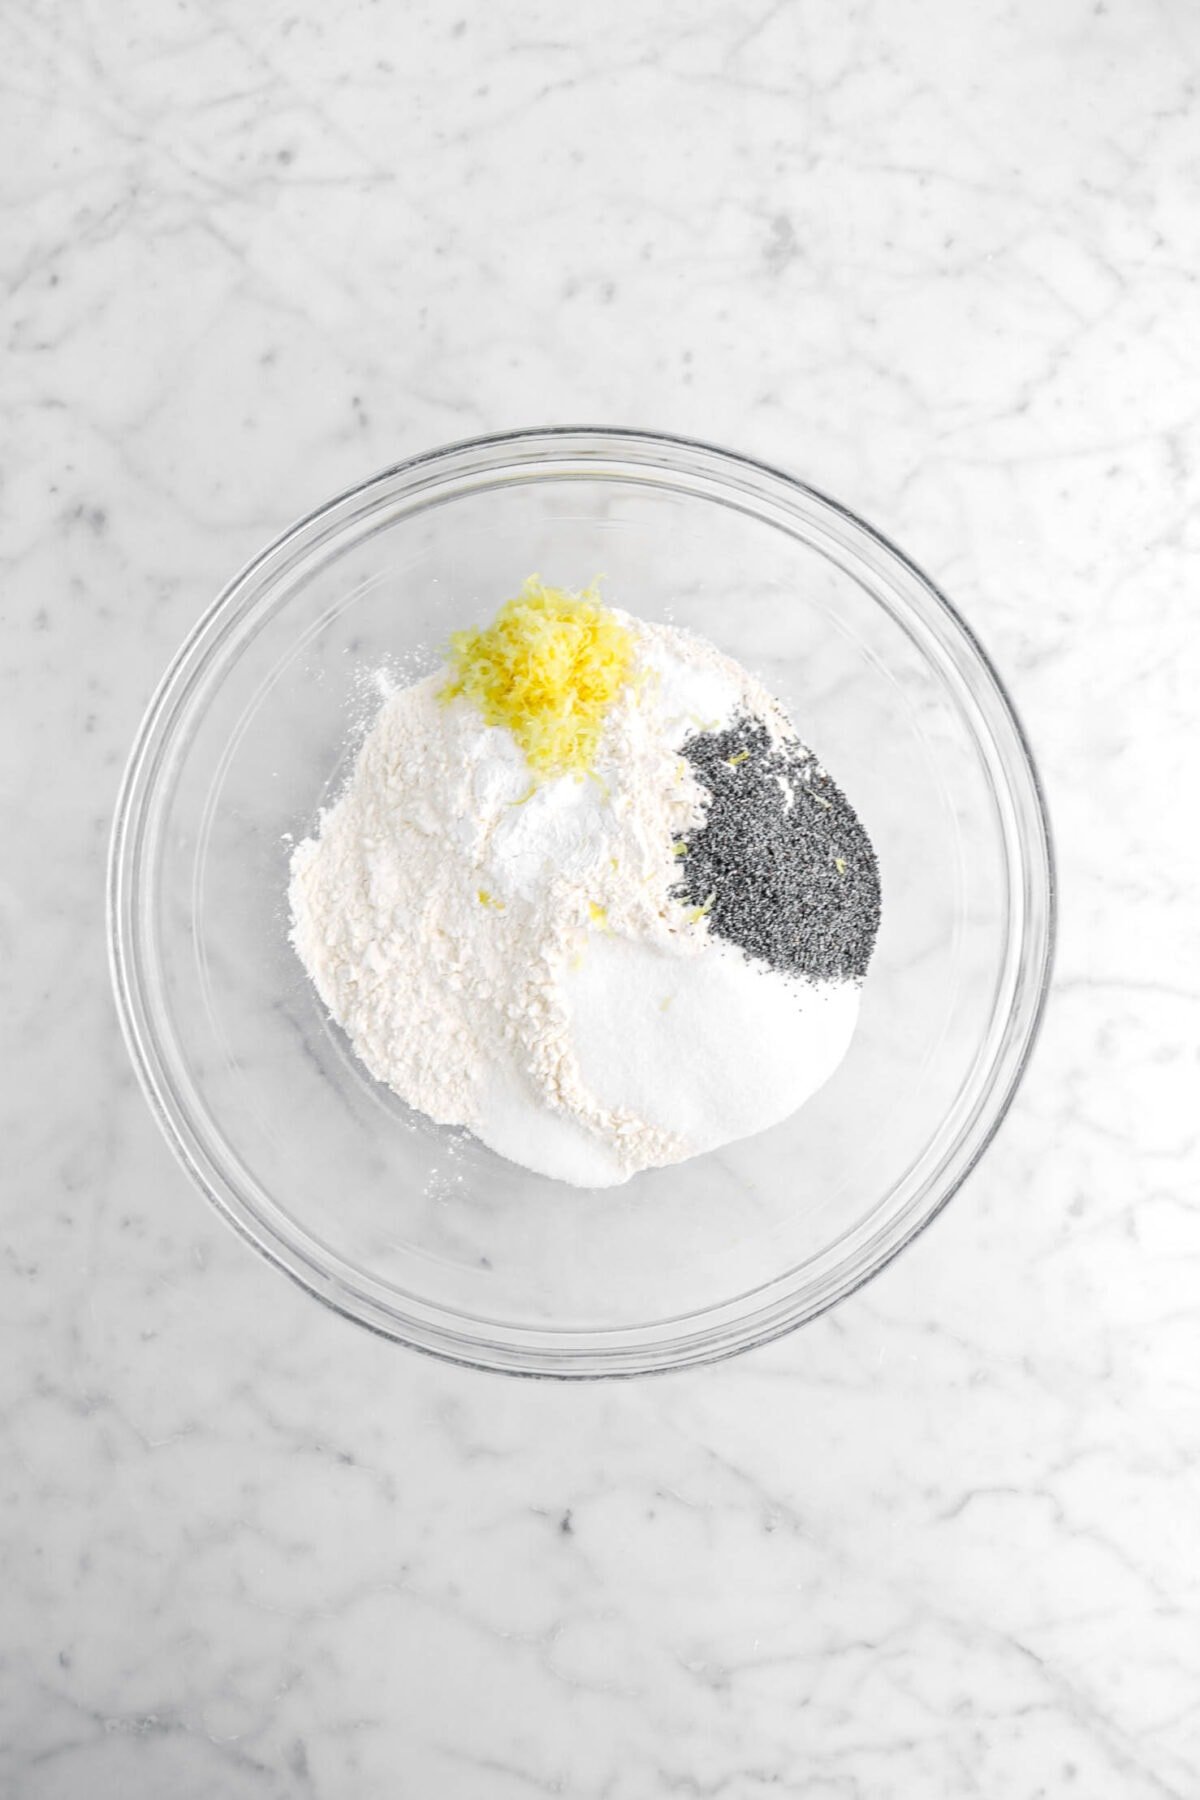 flour, salt, sugar, poppy seeds, baking powder, baking soda, and lemon zest in glass bowl.